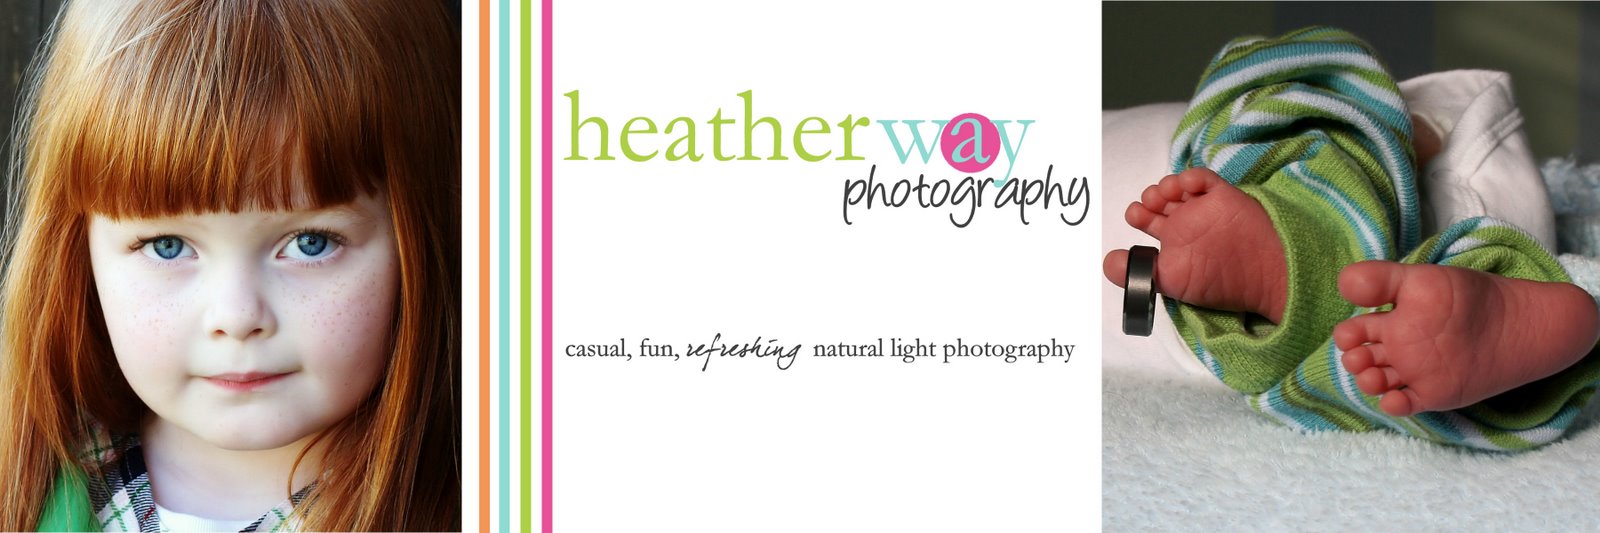 Heather Way Photography